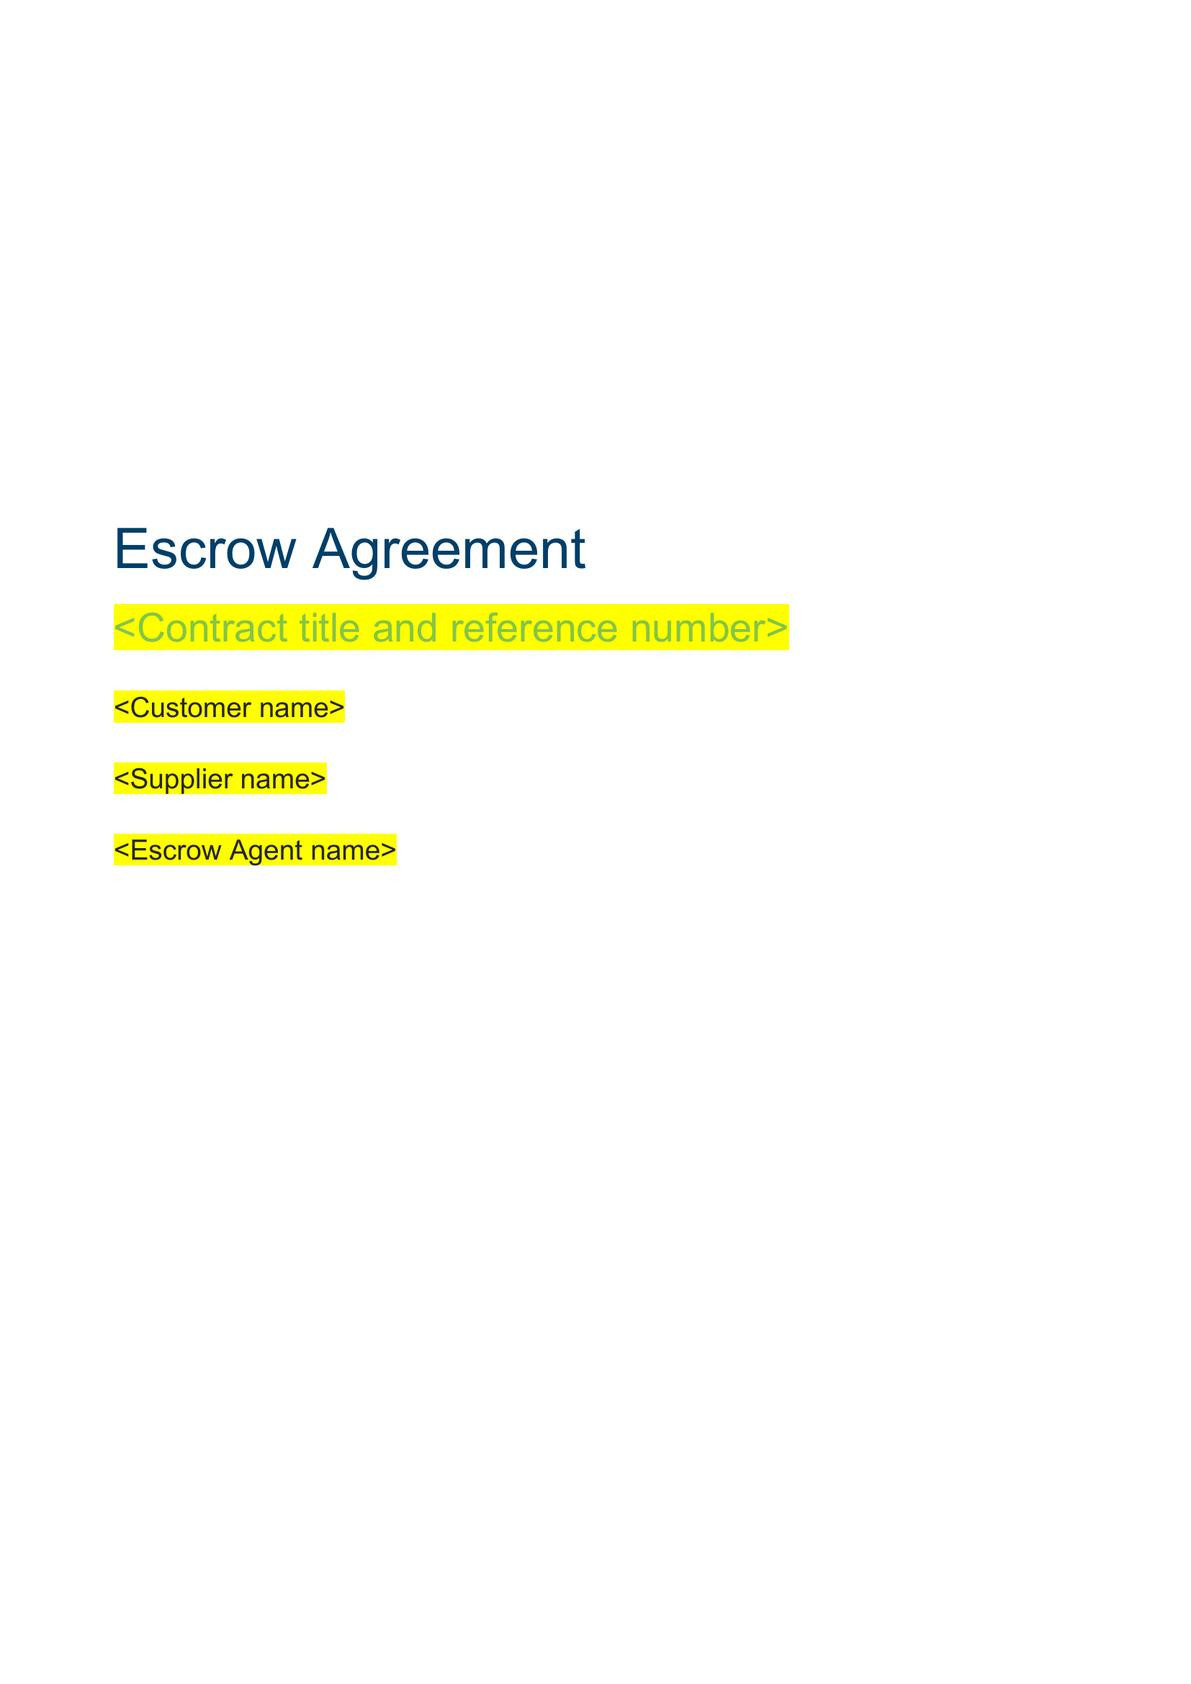 Escrow agreement-0